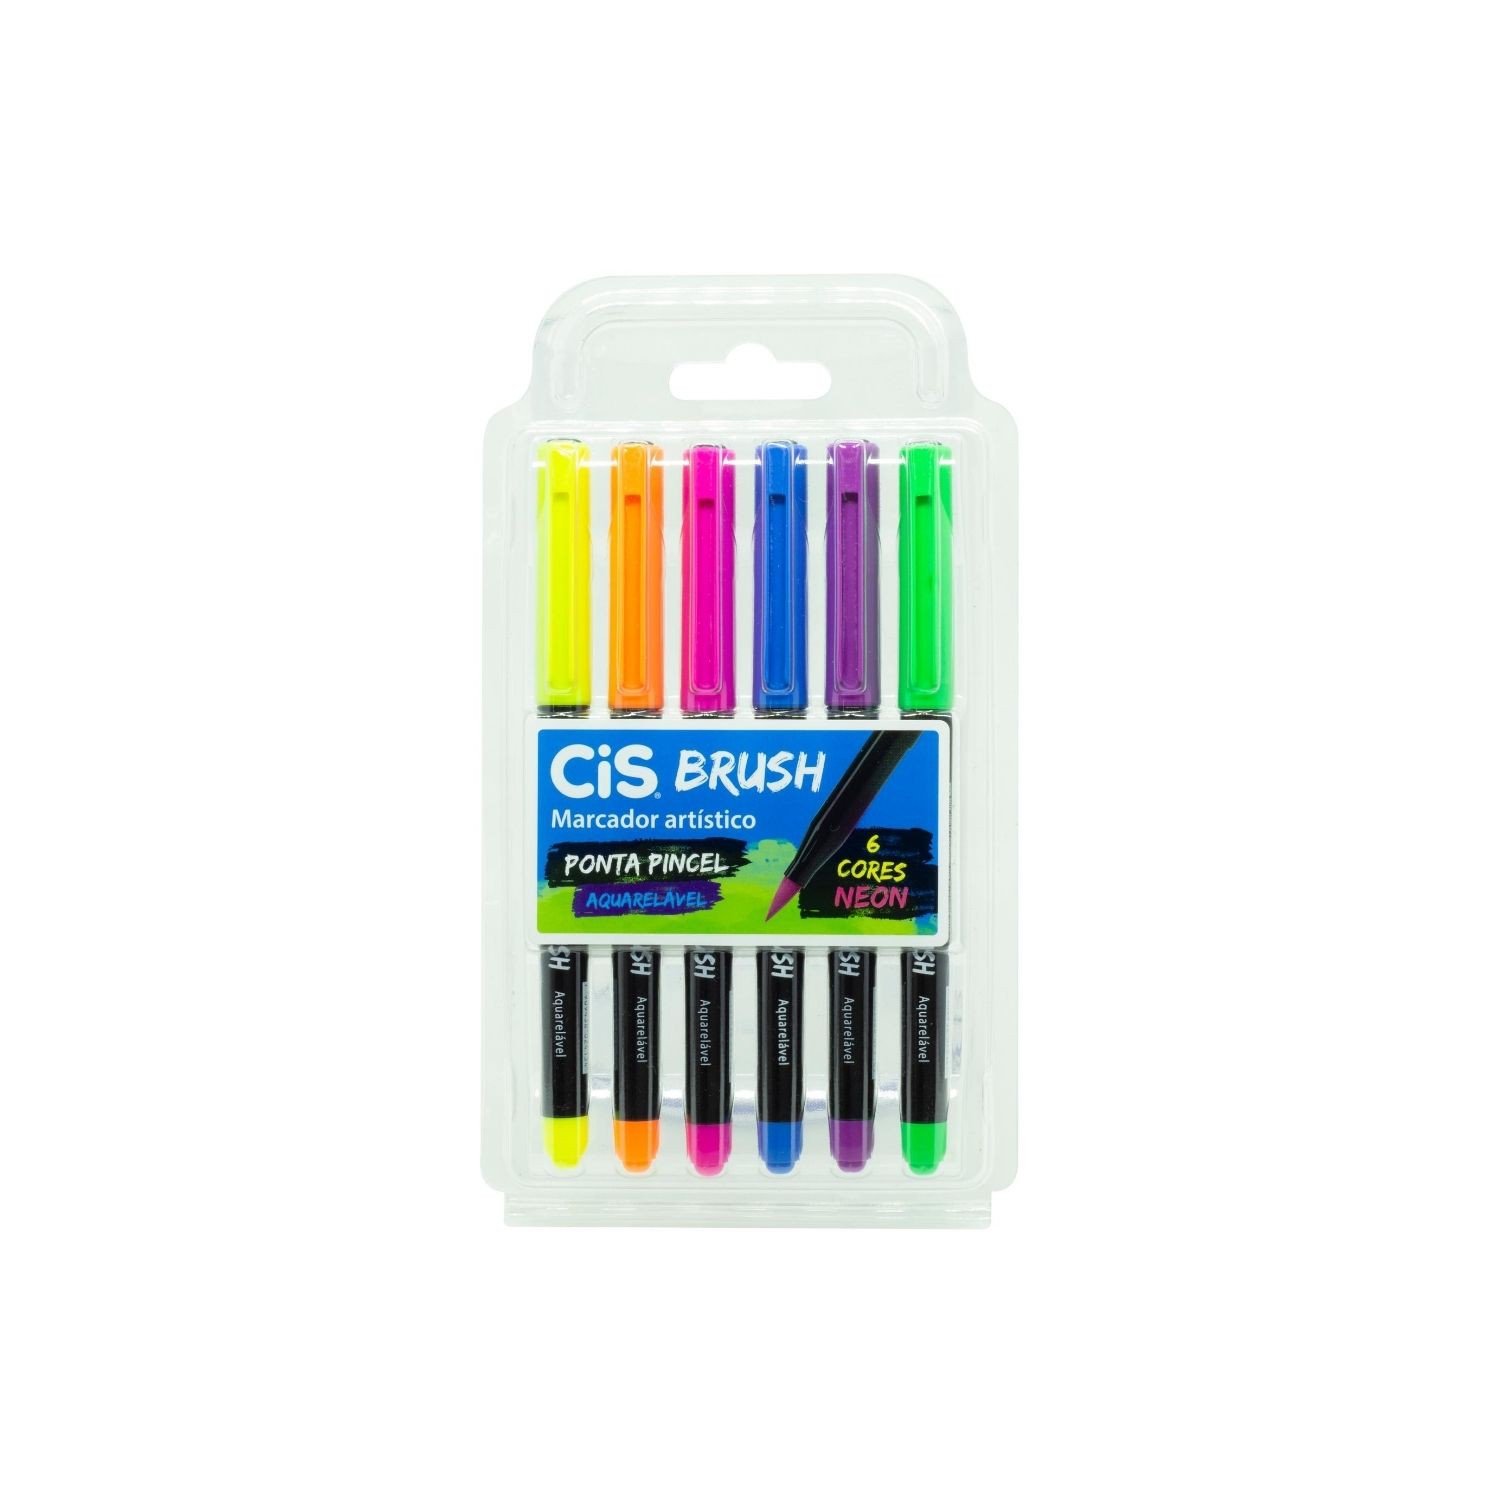 Brush Pen Neon CIS c/ 6 cores